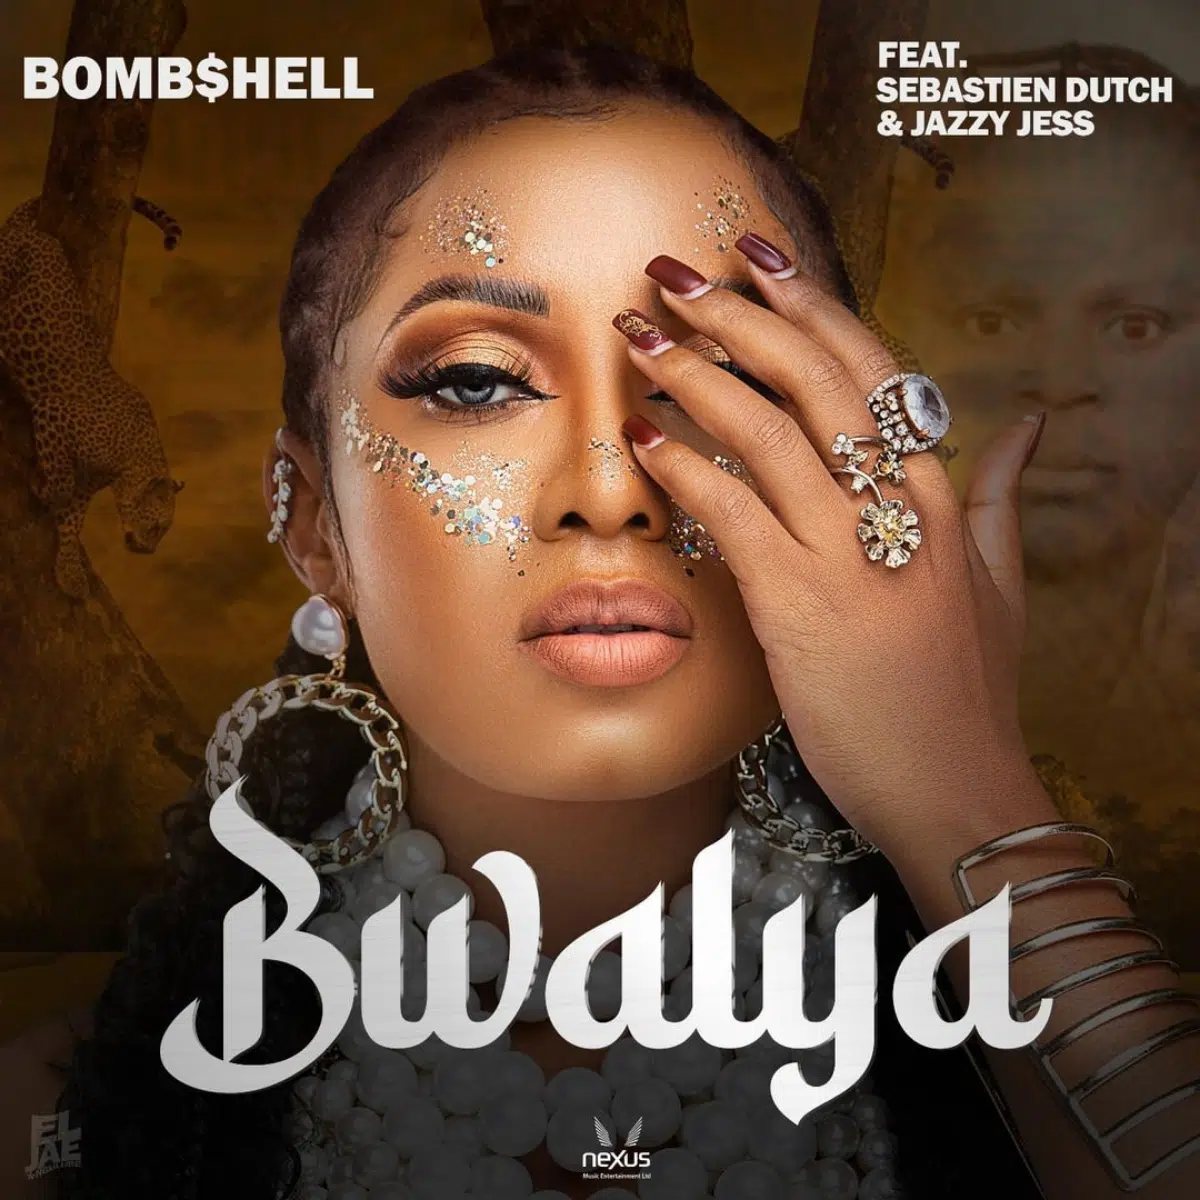 DOWNLOAD: Bombshell  Feat Sebastien Dutch & Jazzy Jess – “Bwalya” Mp3